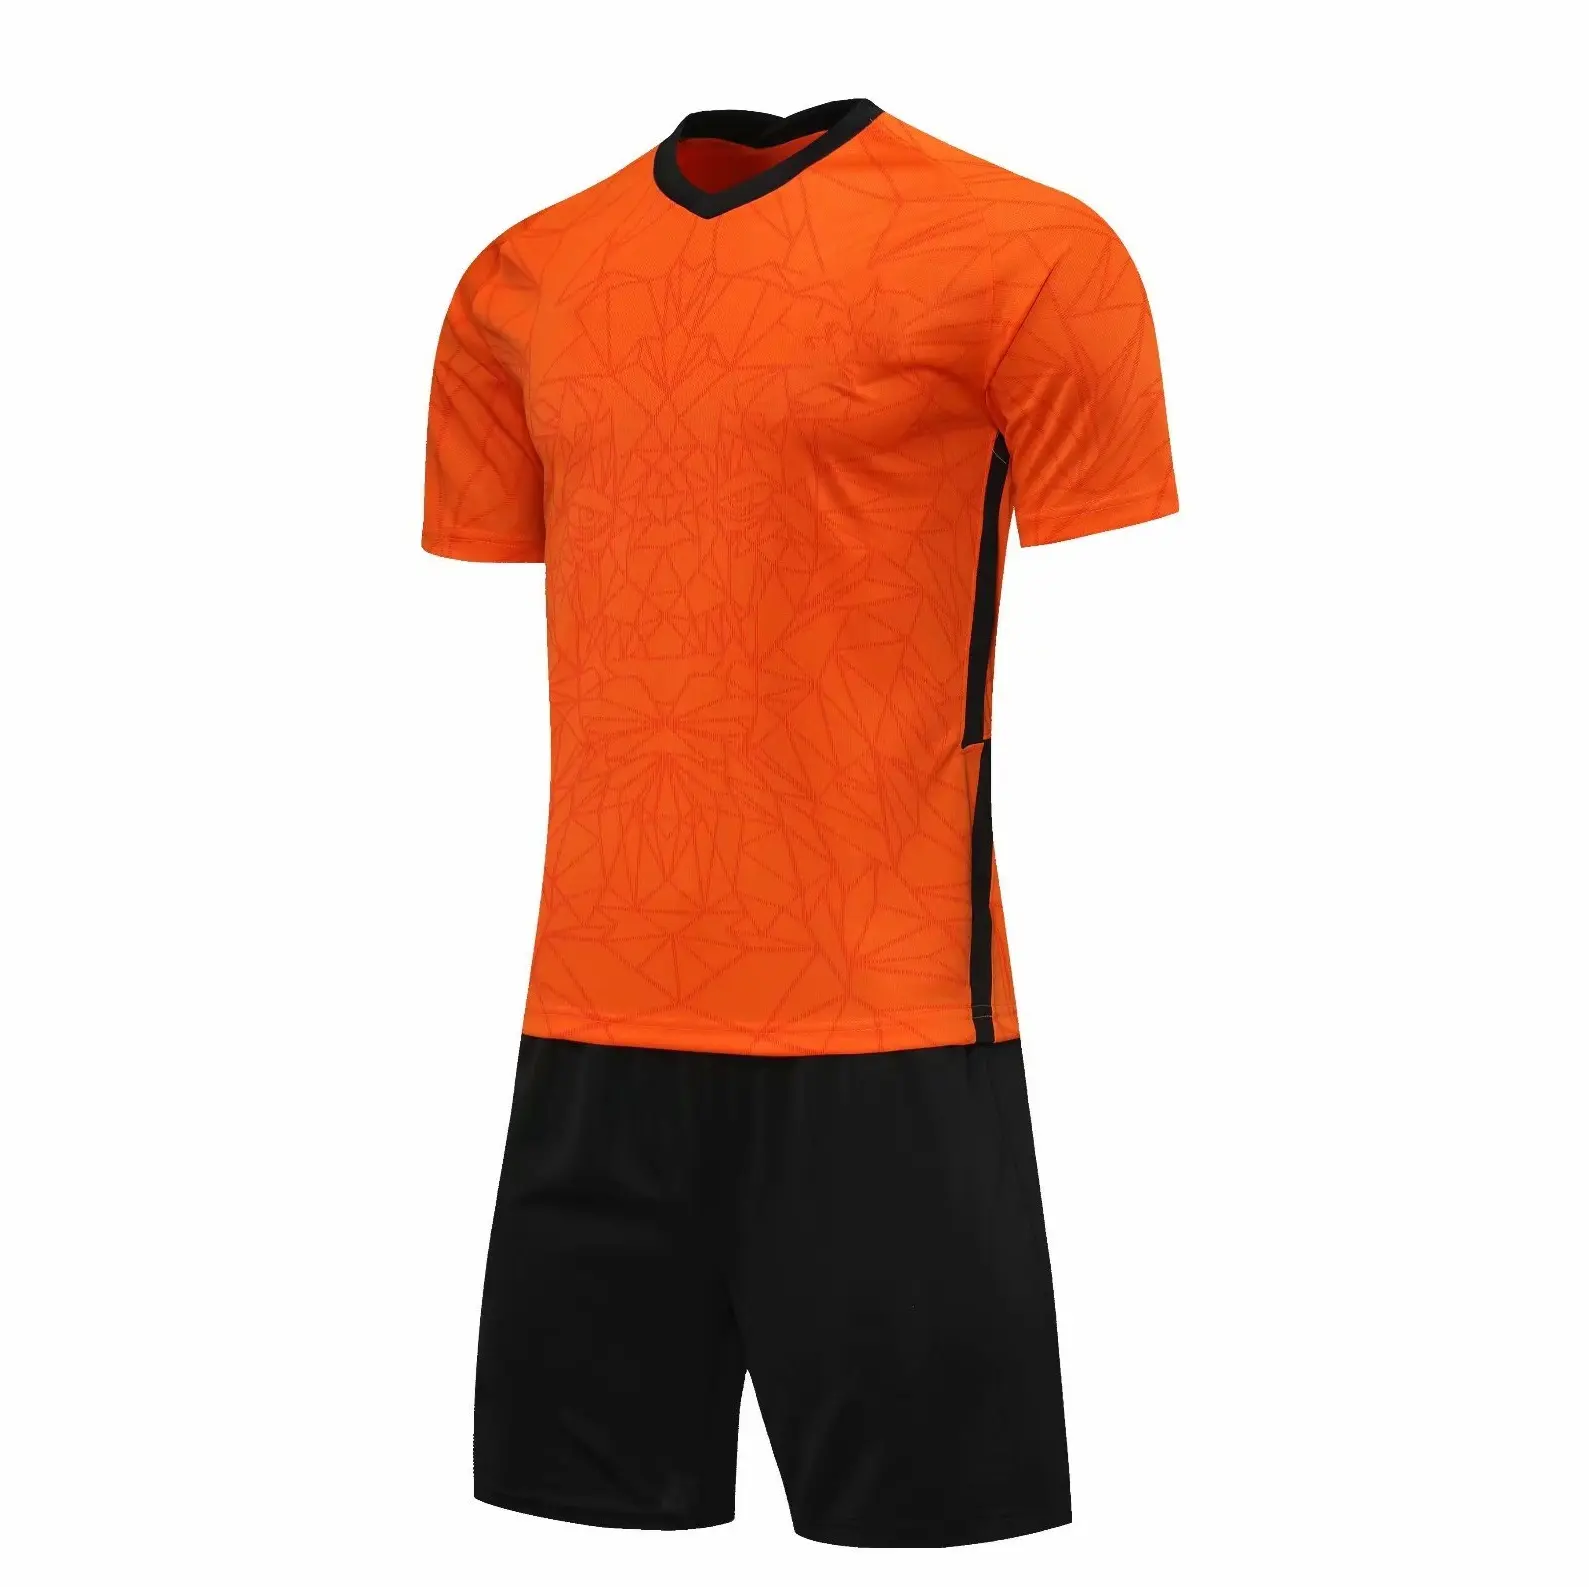 Jersey Sepak Bola Tanpa Logo, Baju Sepak Bola 2021 2022 Gaya Belanda, Cepat Kering, Seragam Sepak Bola